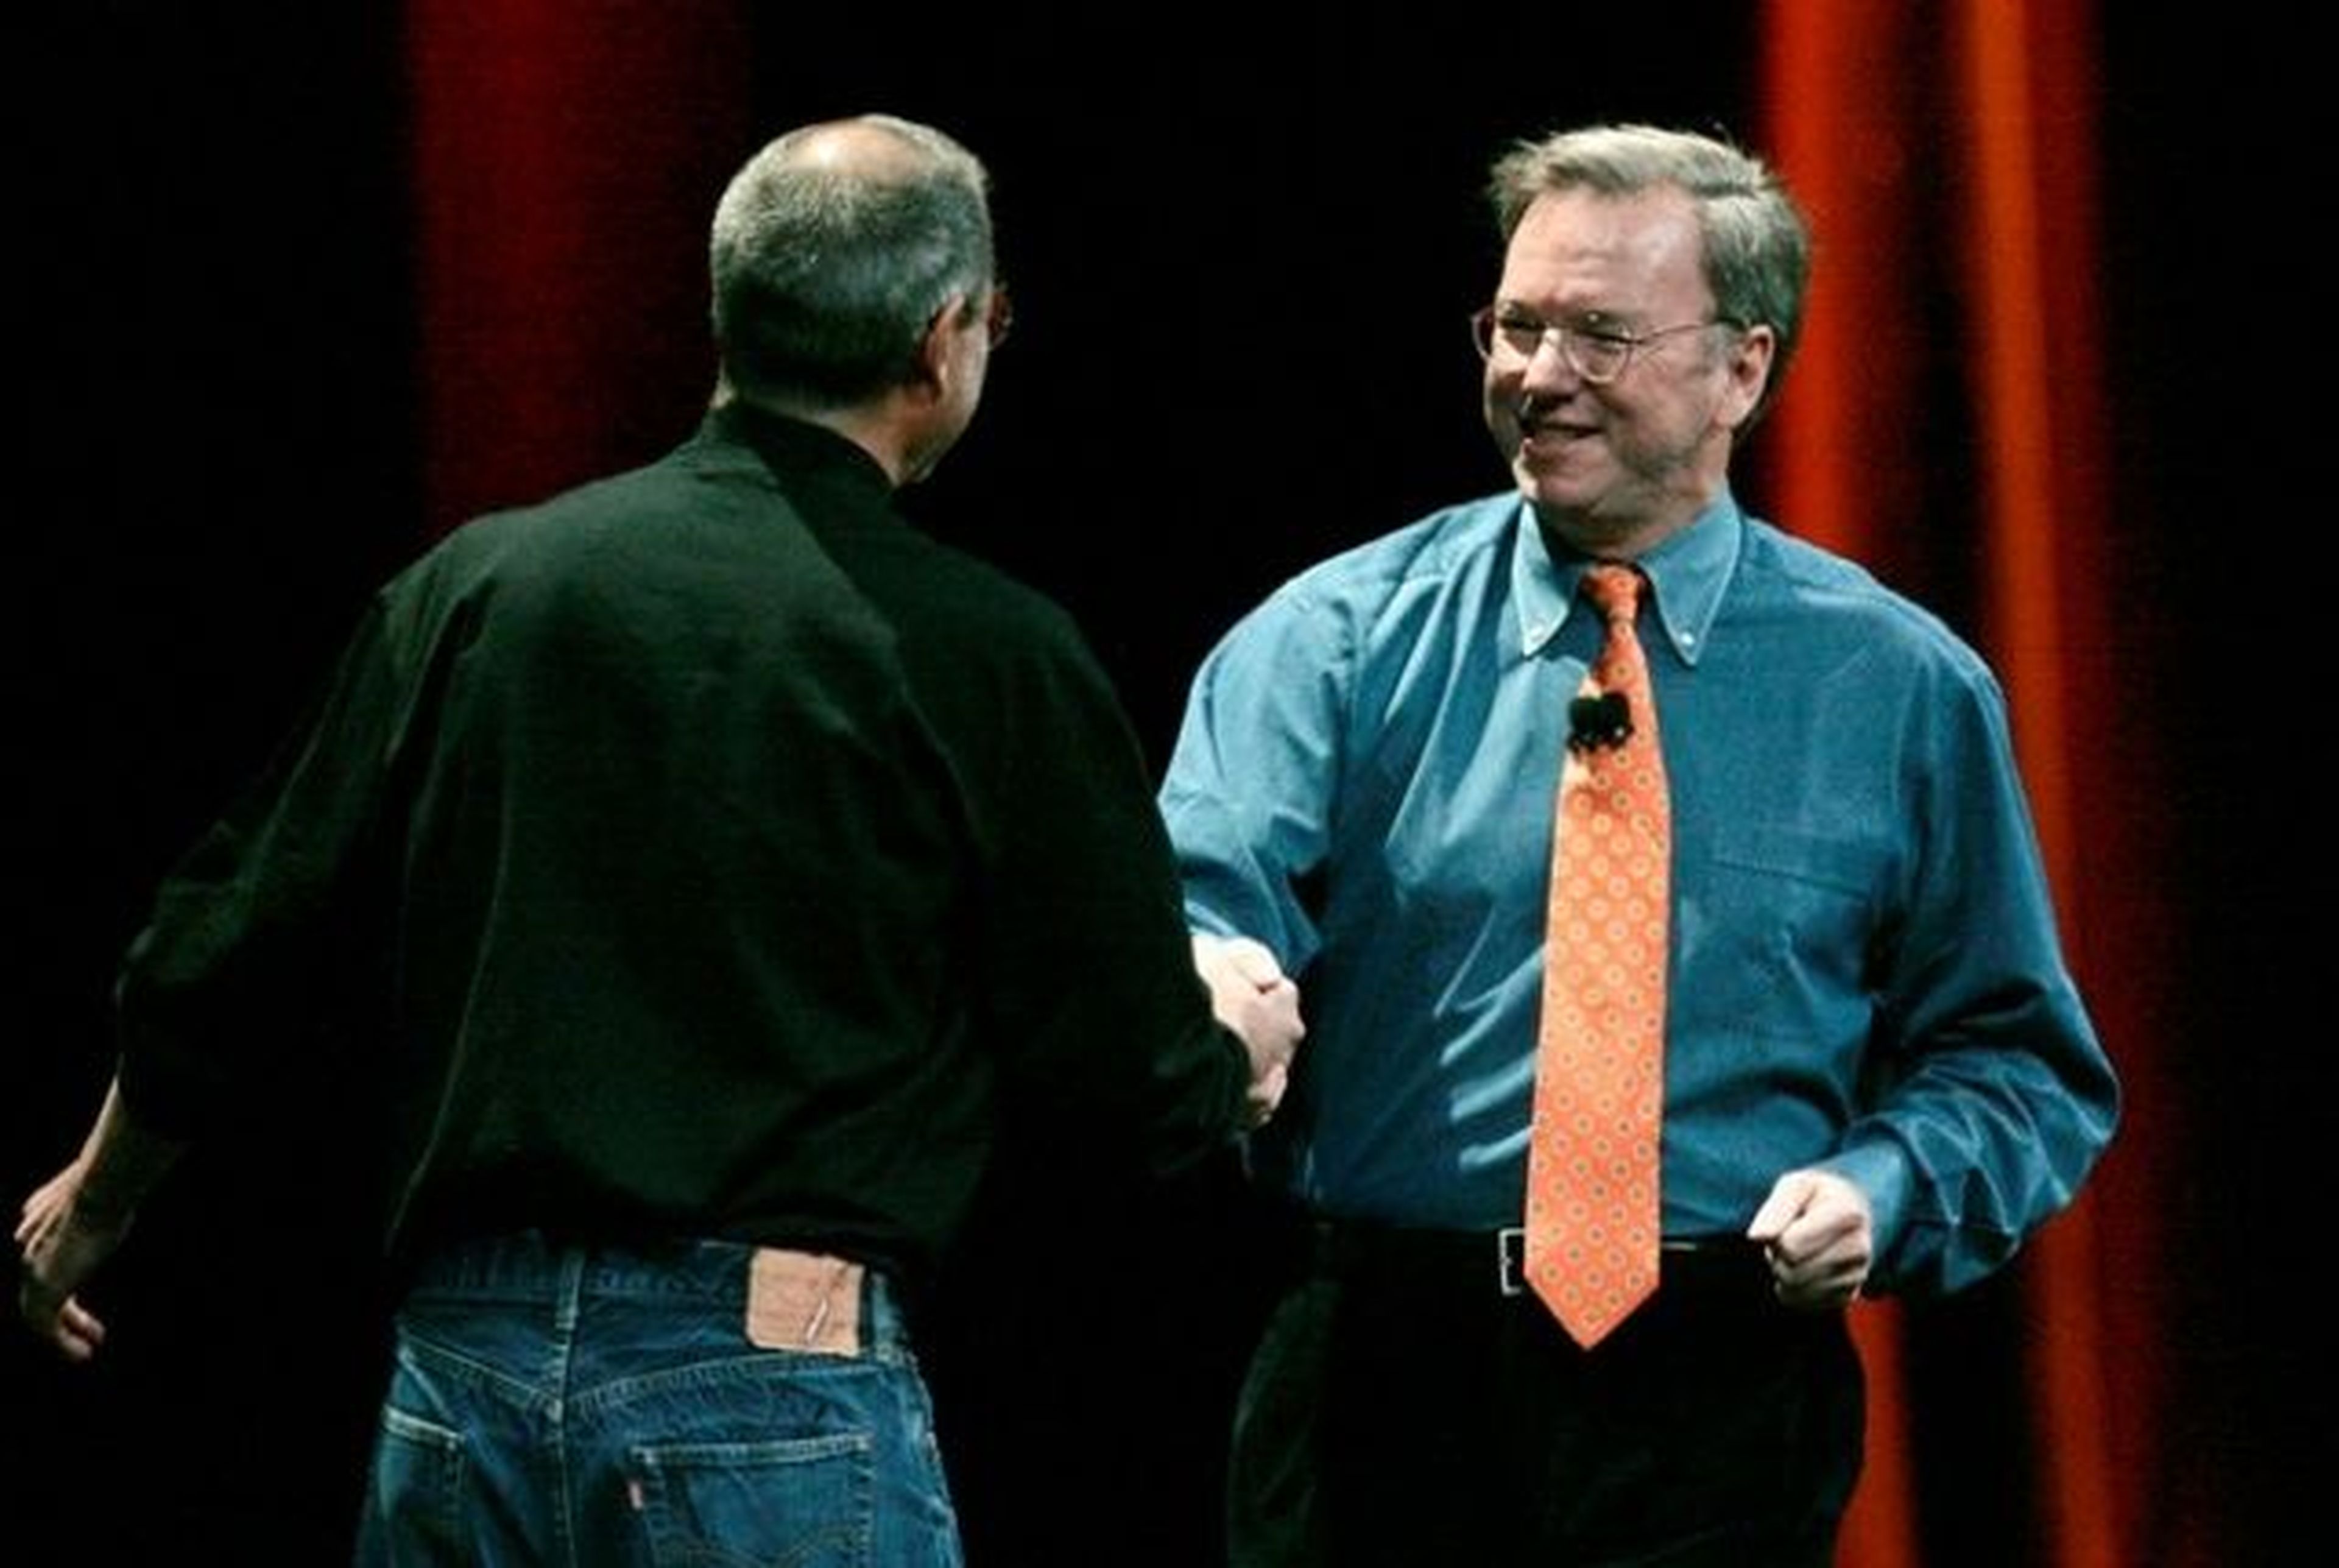 Steve Jobs Eric Schmidt pactos secretos salarios